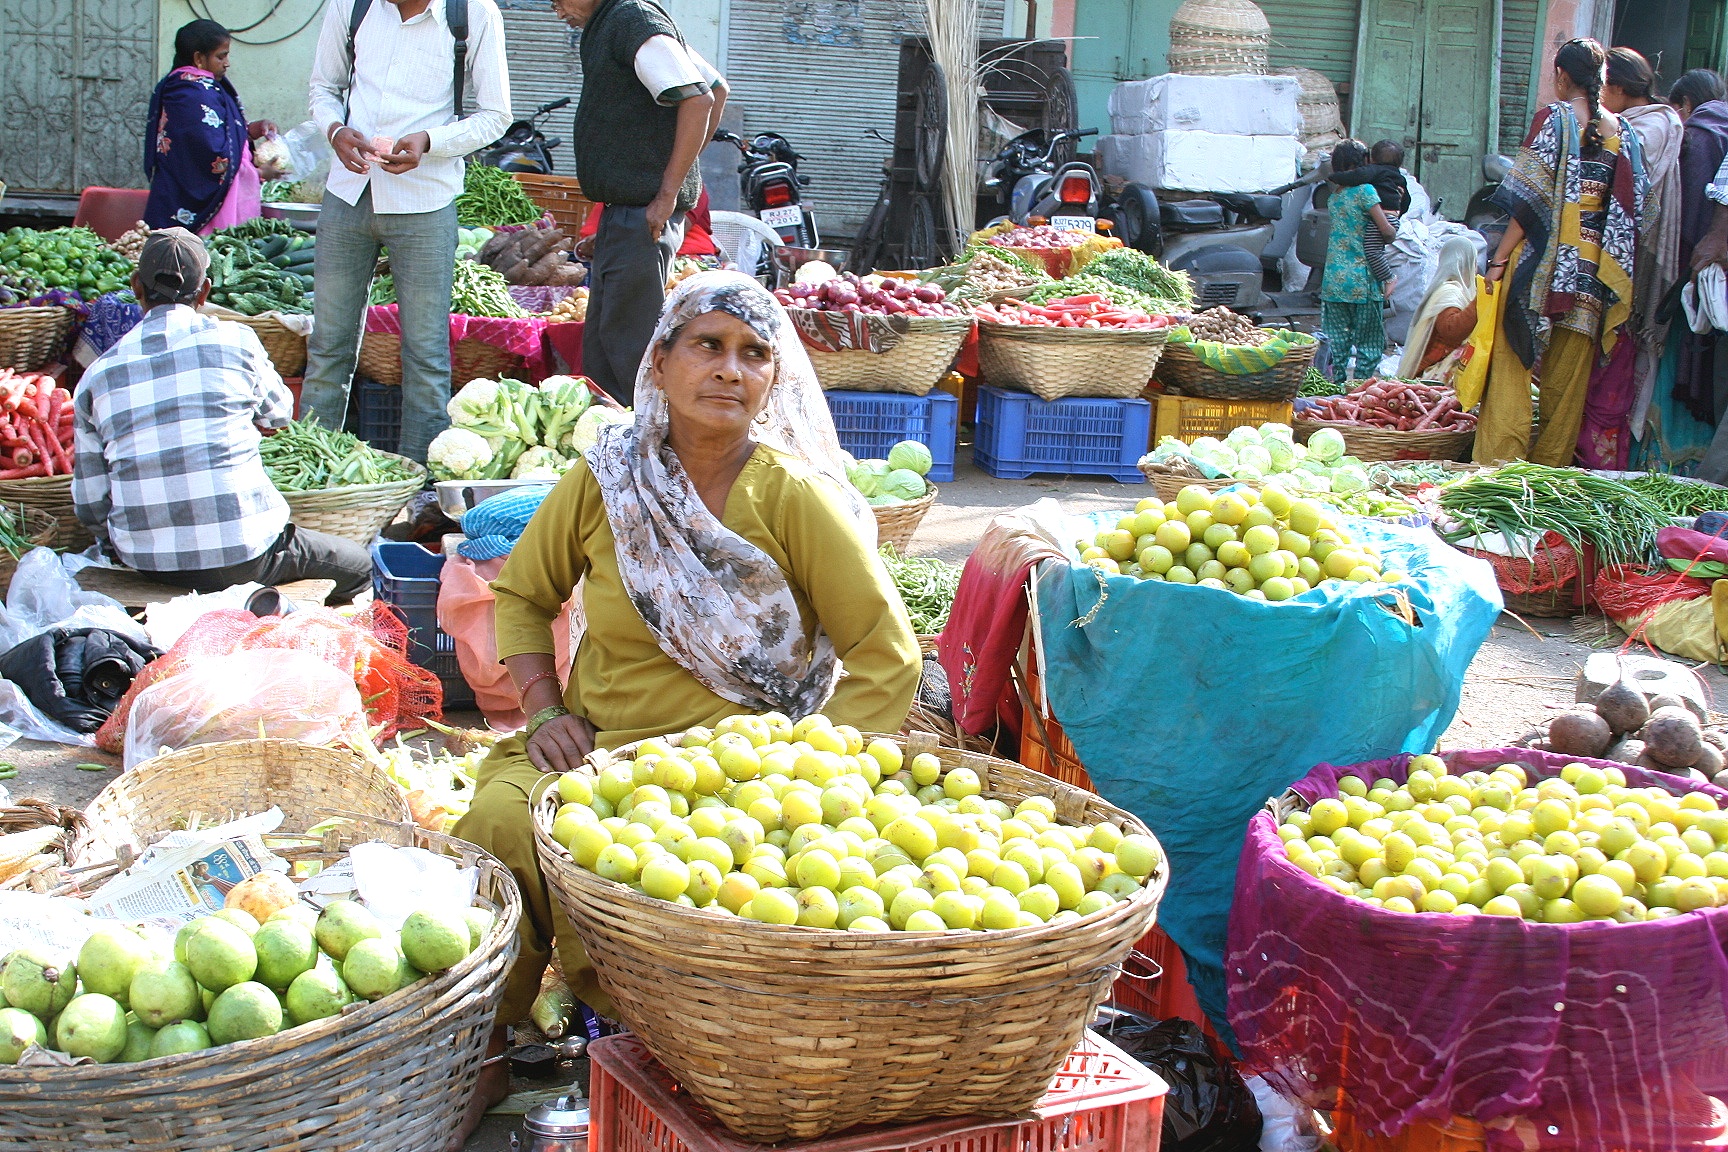 Street vendor in vegetable market, Jaipur, India